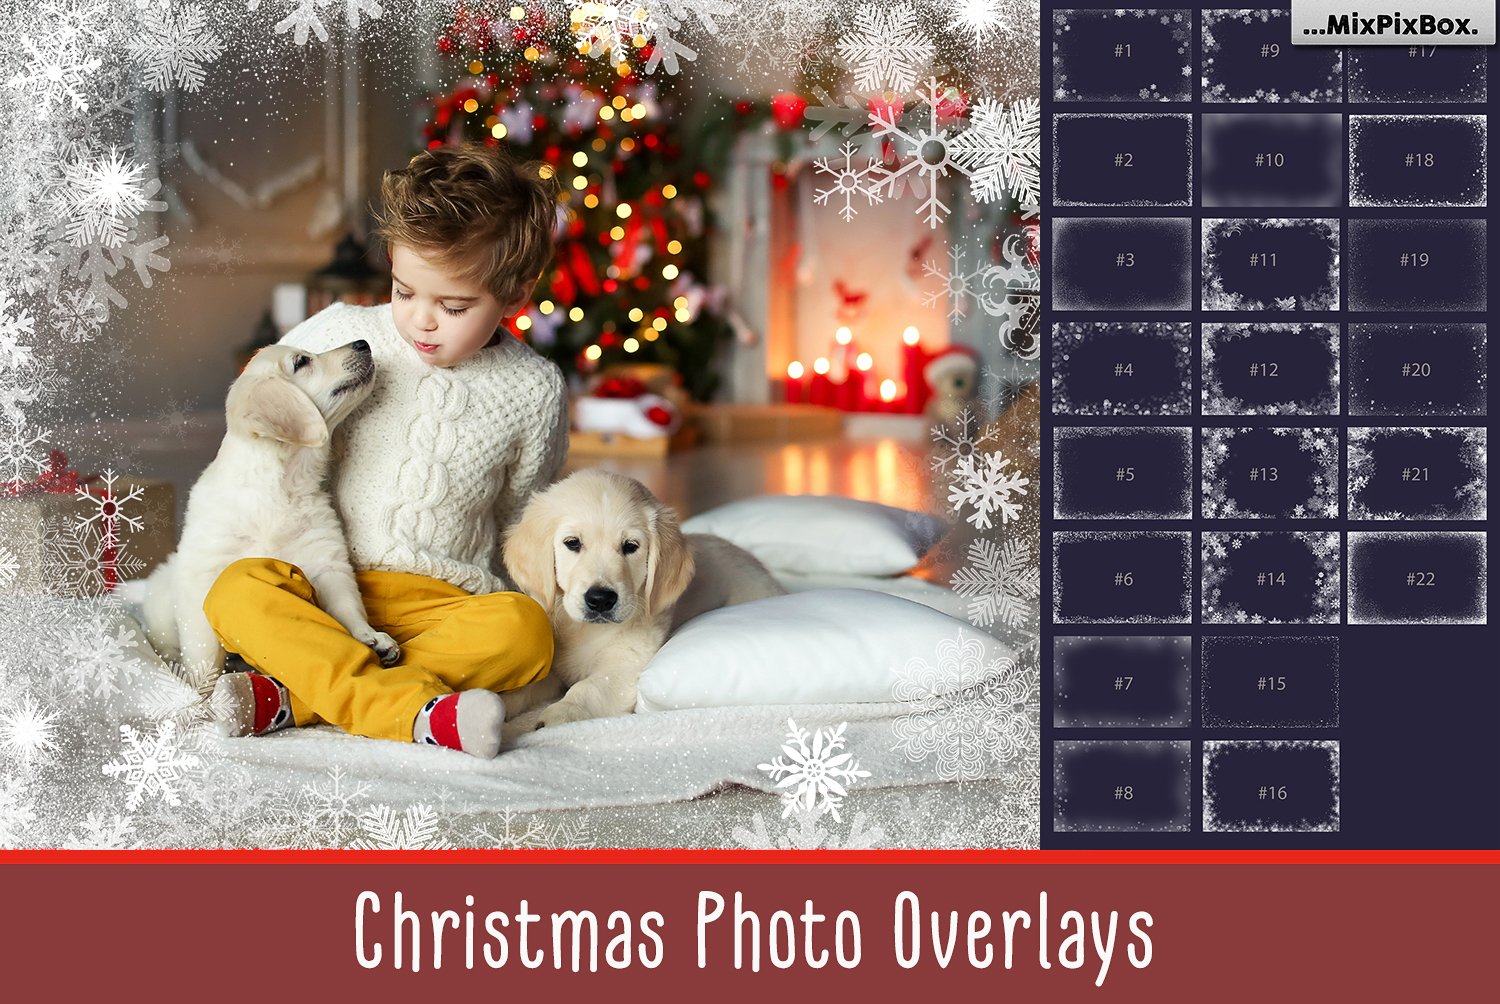 20 Christmas Photo Overlayscover image.